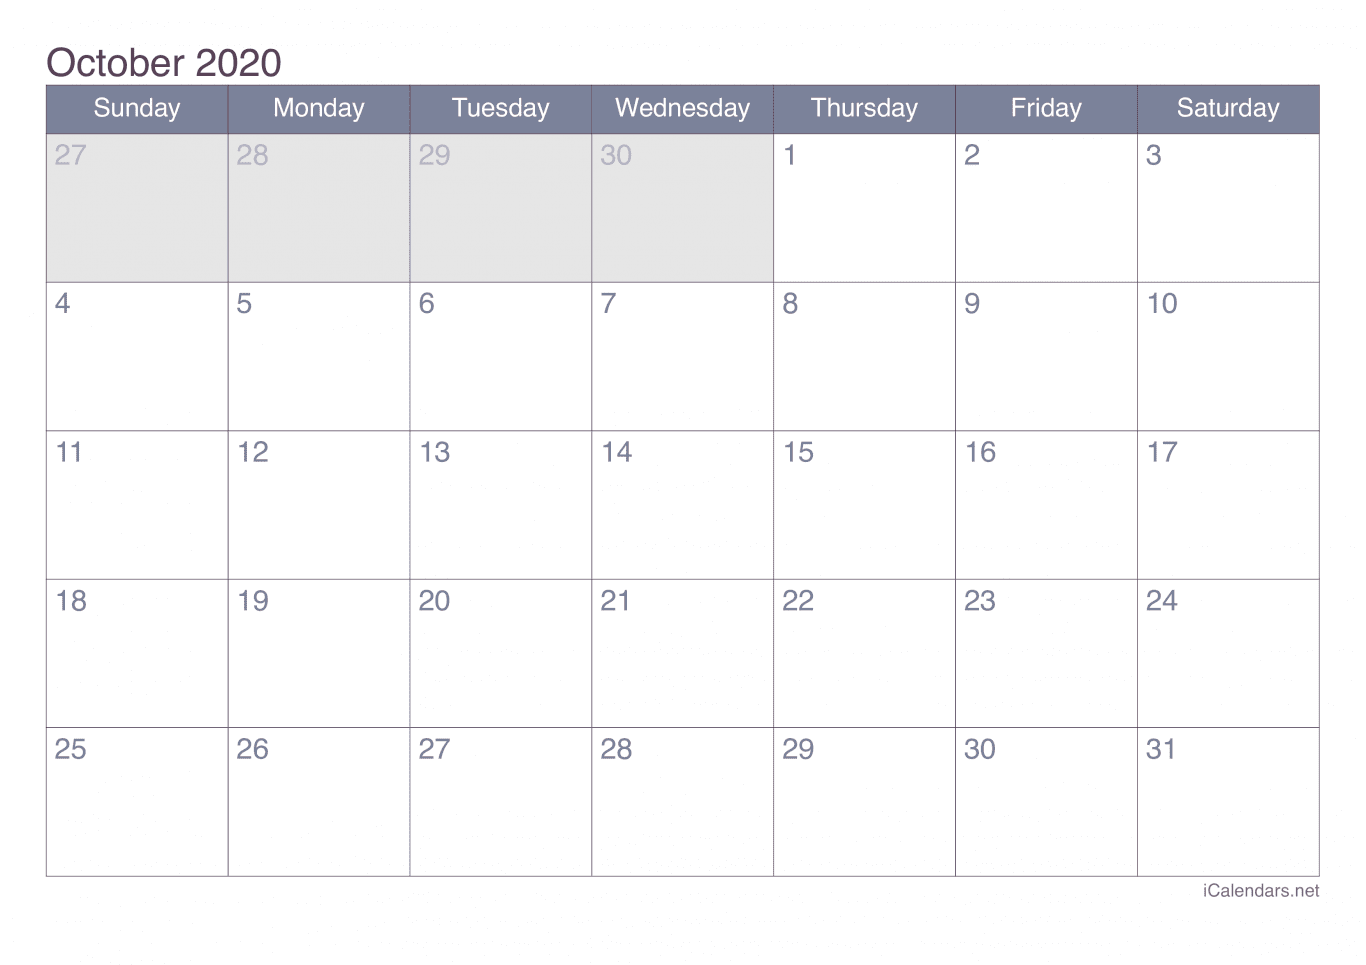 2020 October Calendar - Office